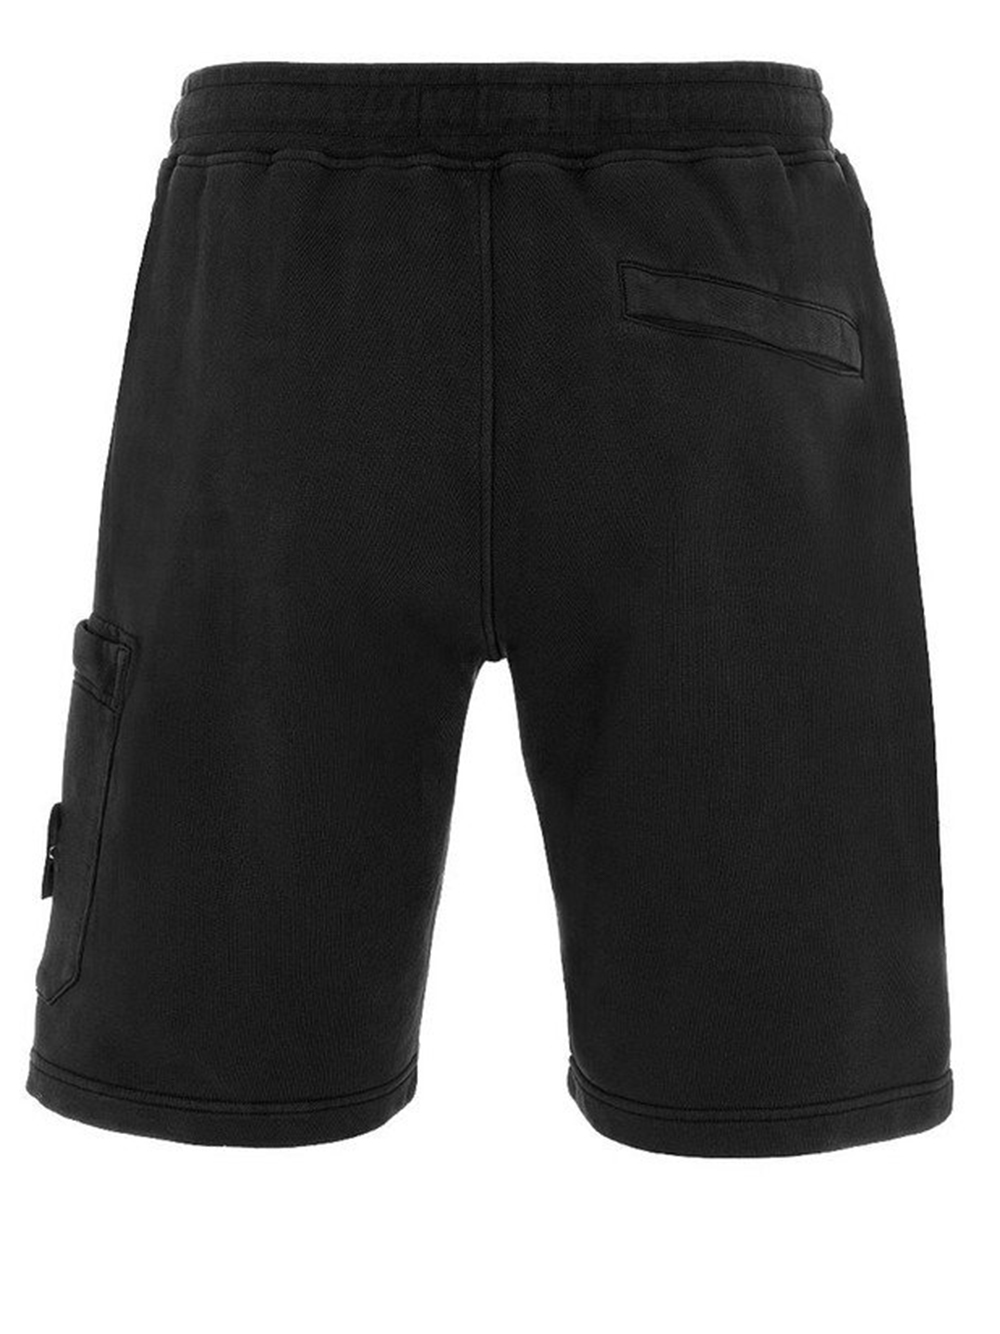 Stone Island 64651 Cotton Fleece Garment Dyed Shorts Black Men's 